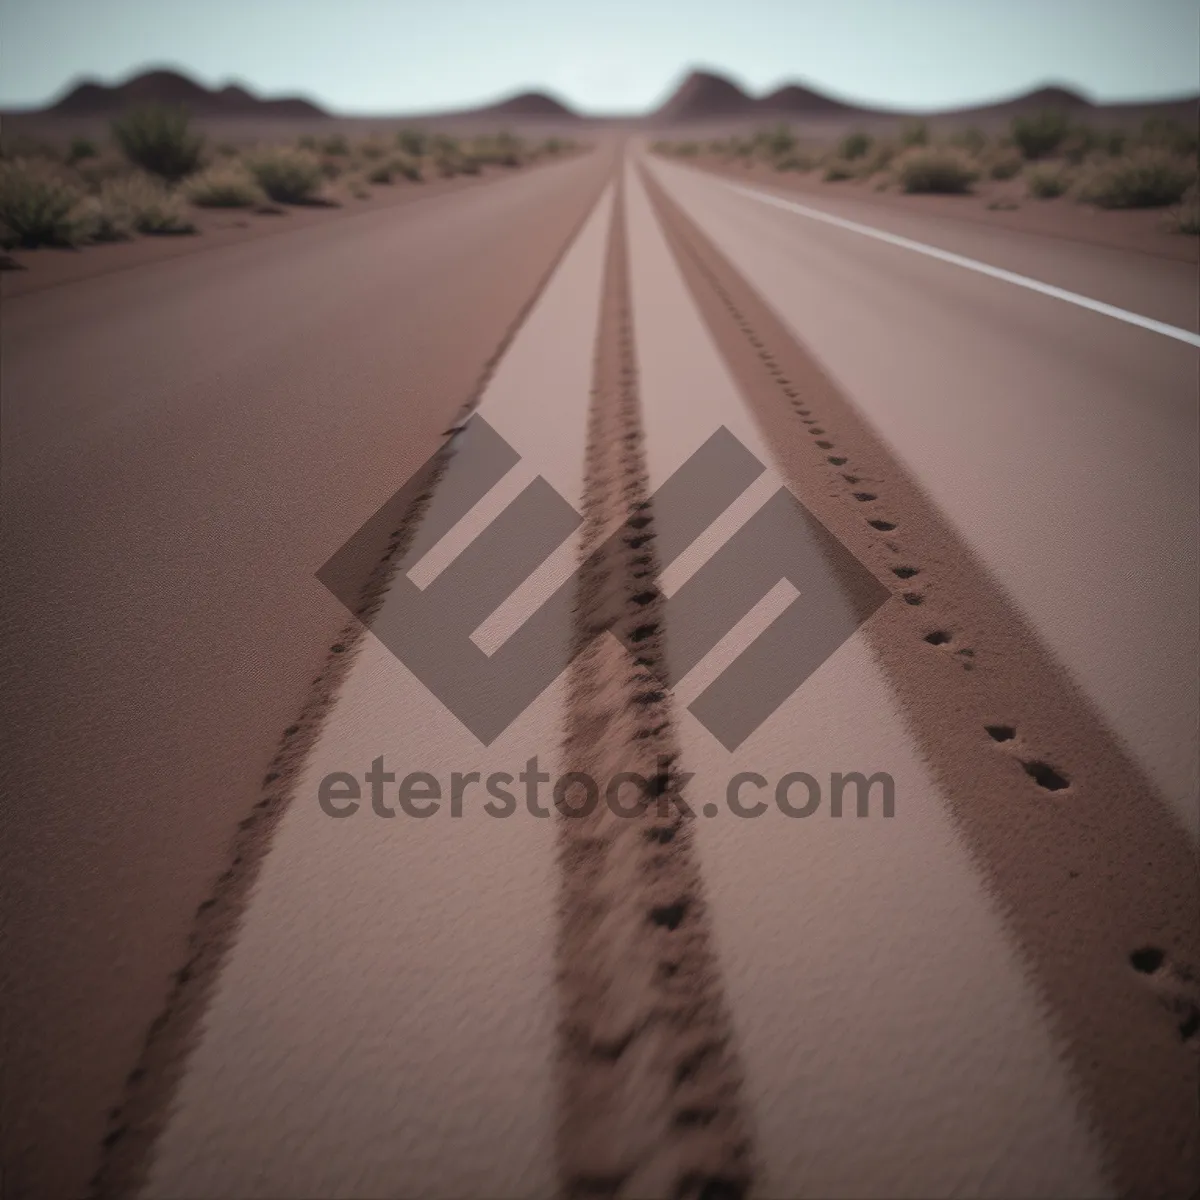 Picture of Scenic Highway Journey through Desert Landscape